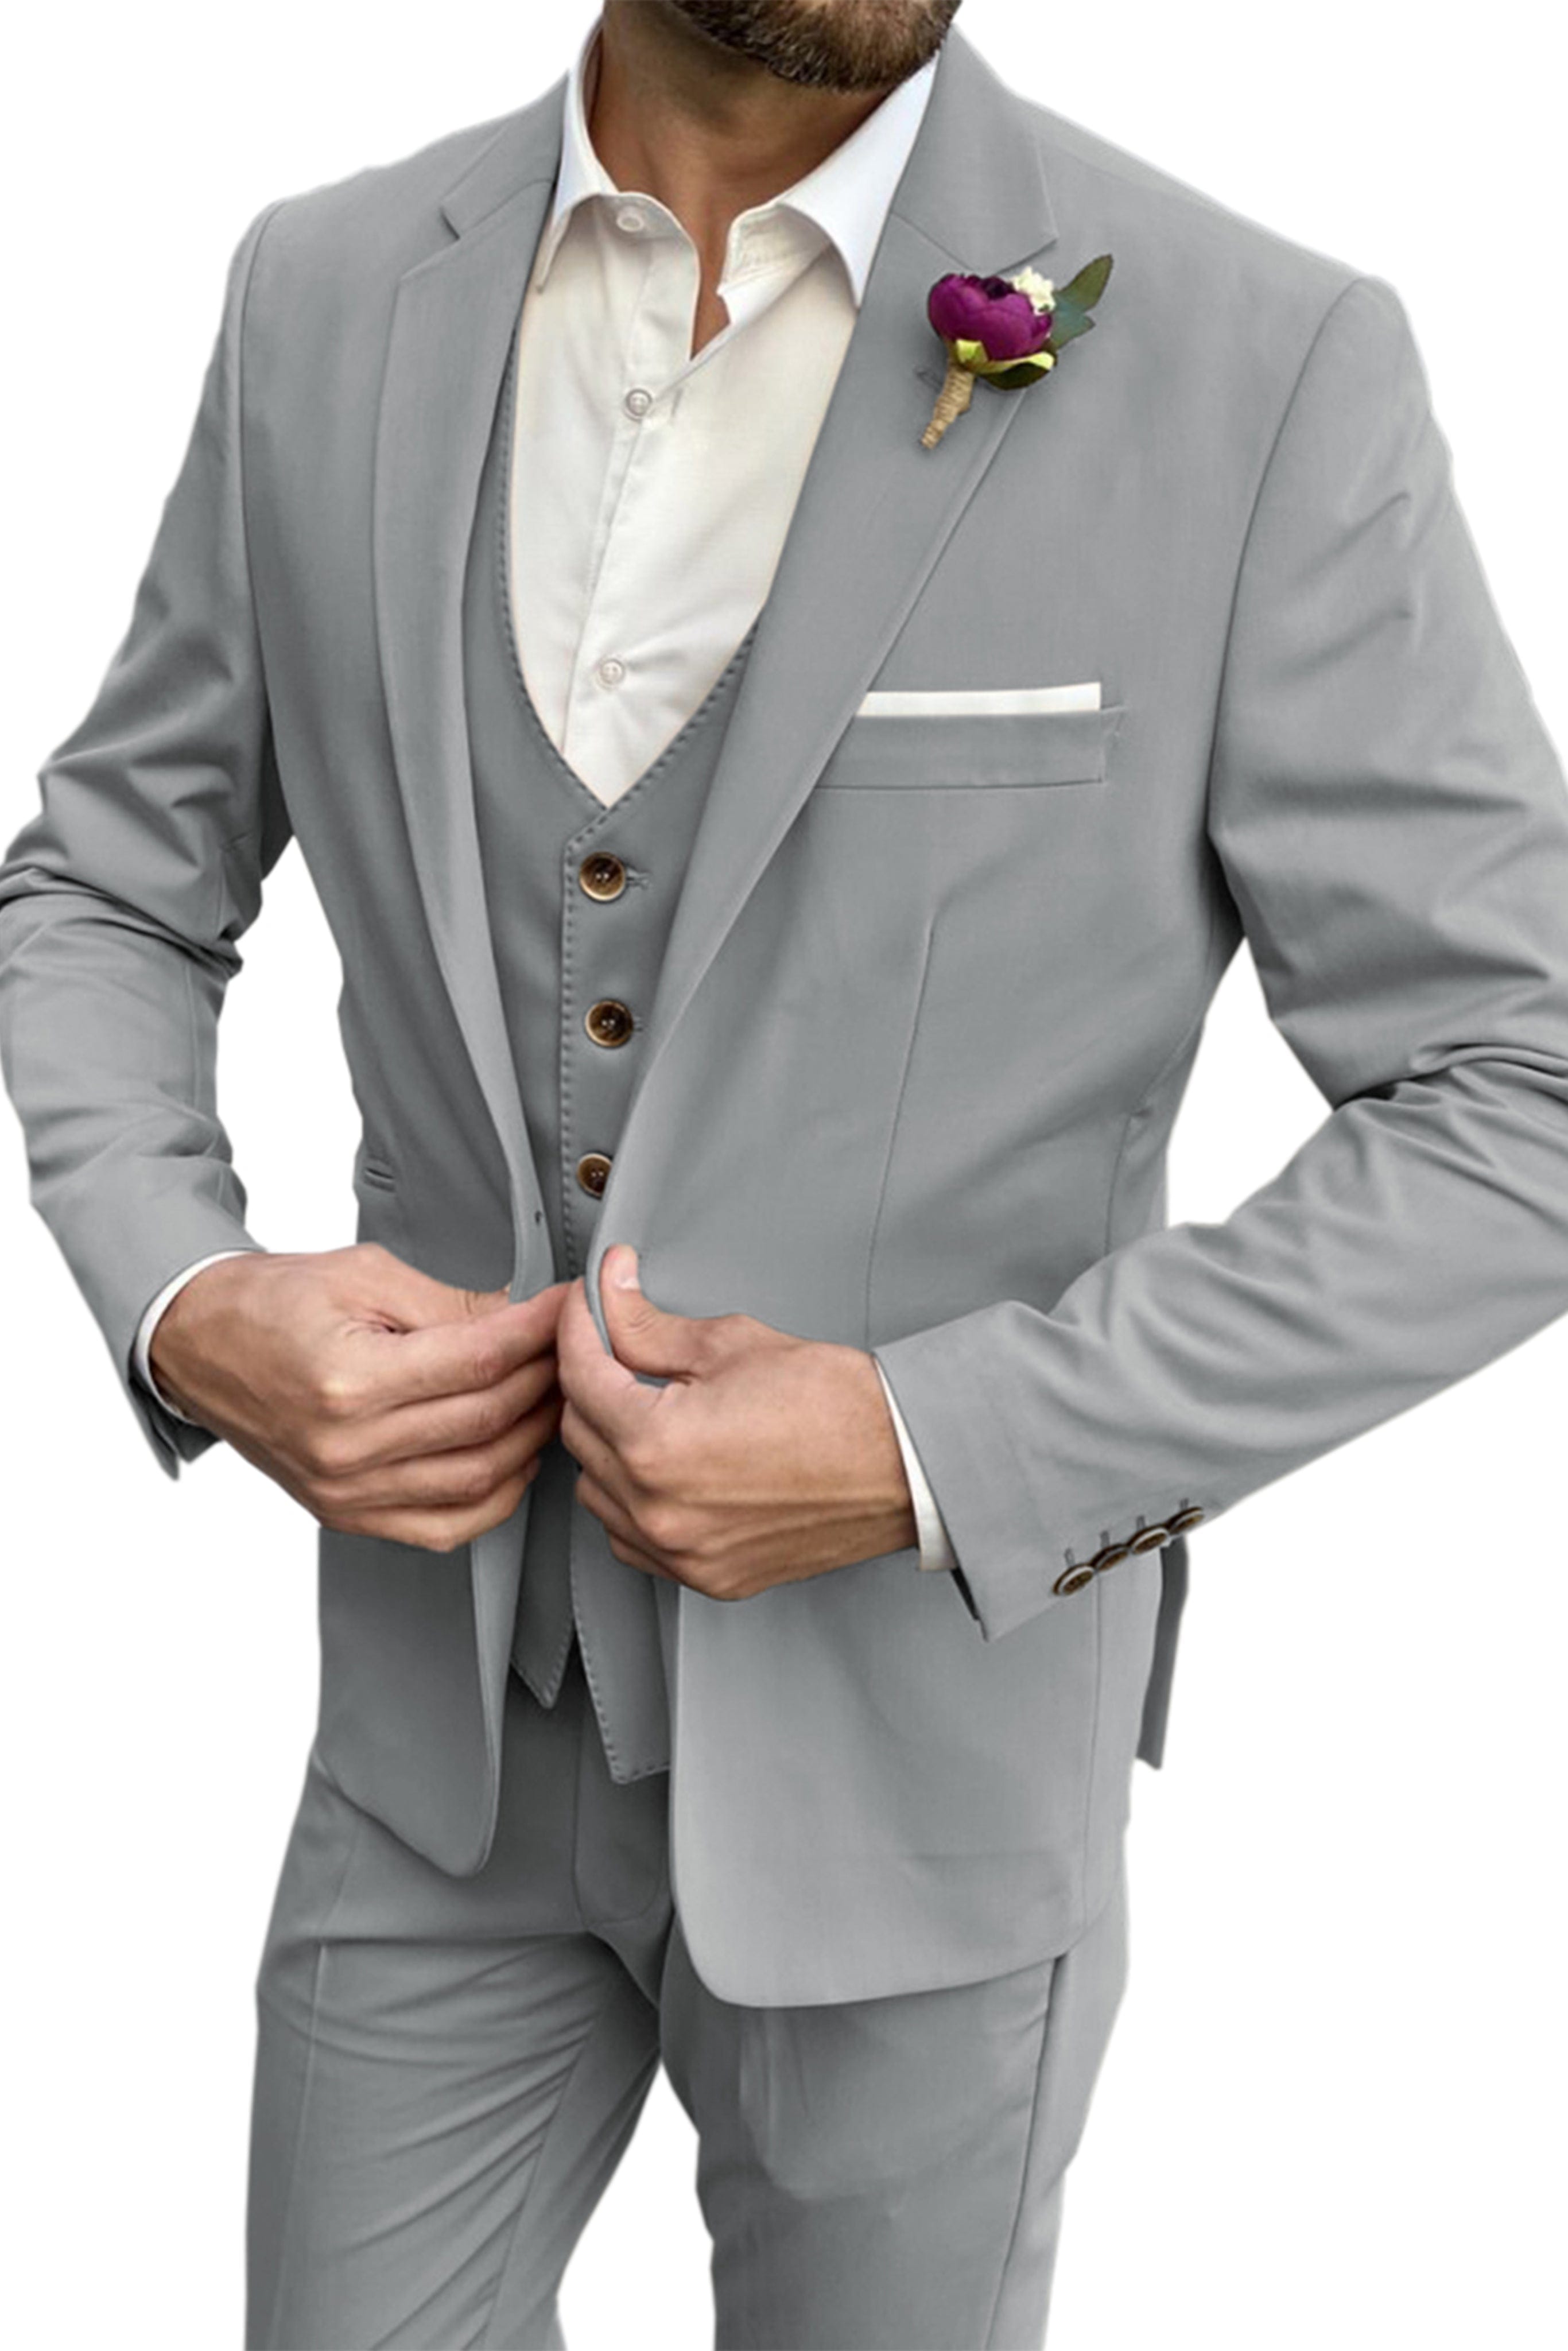 aesido Men's Suit 3 Piece Single Button Notch Lapel Blazer For Wedding